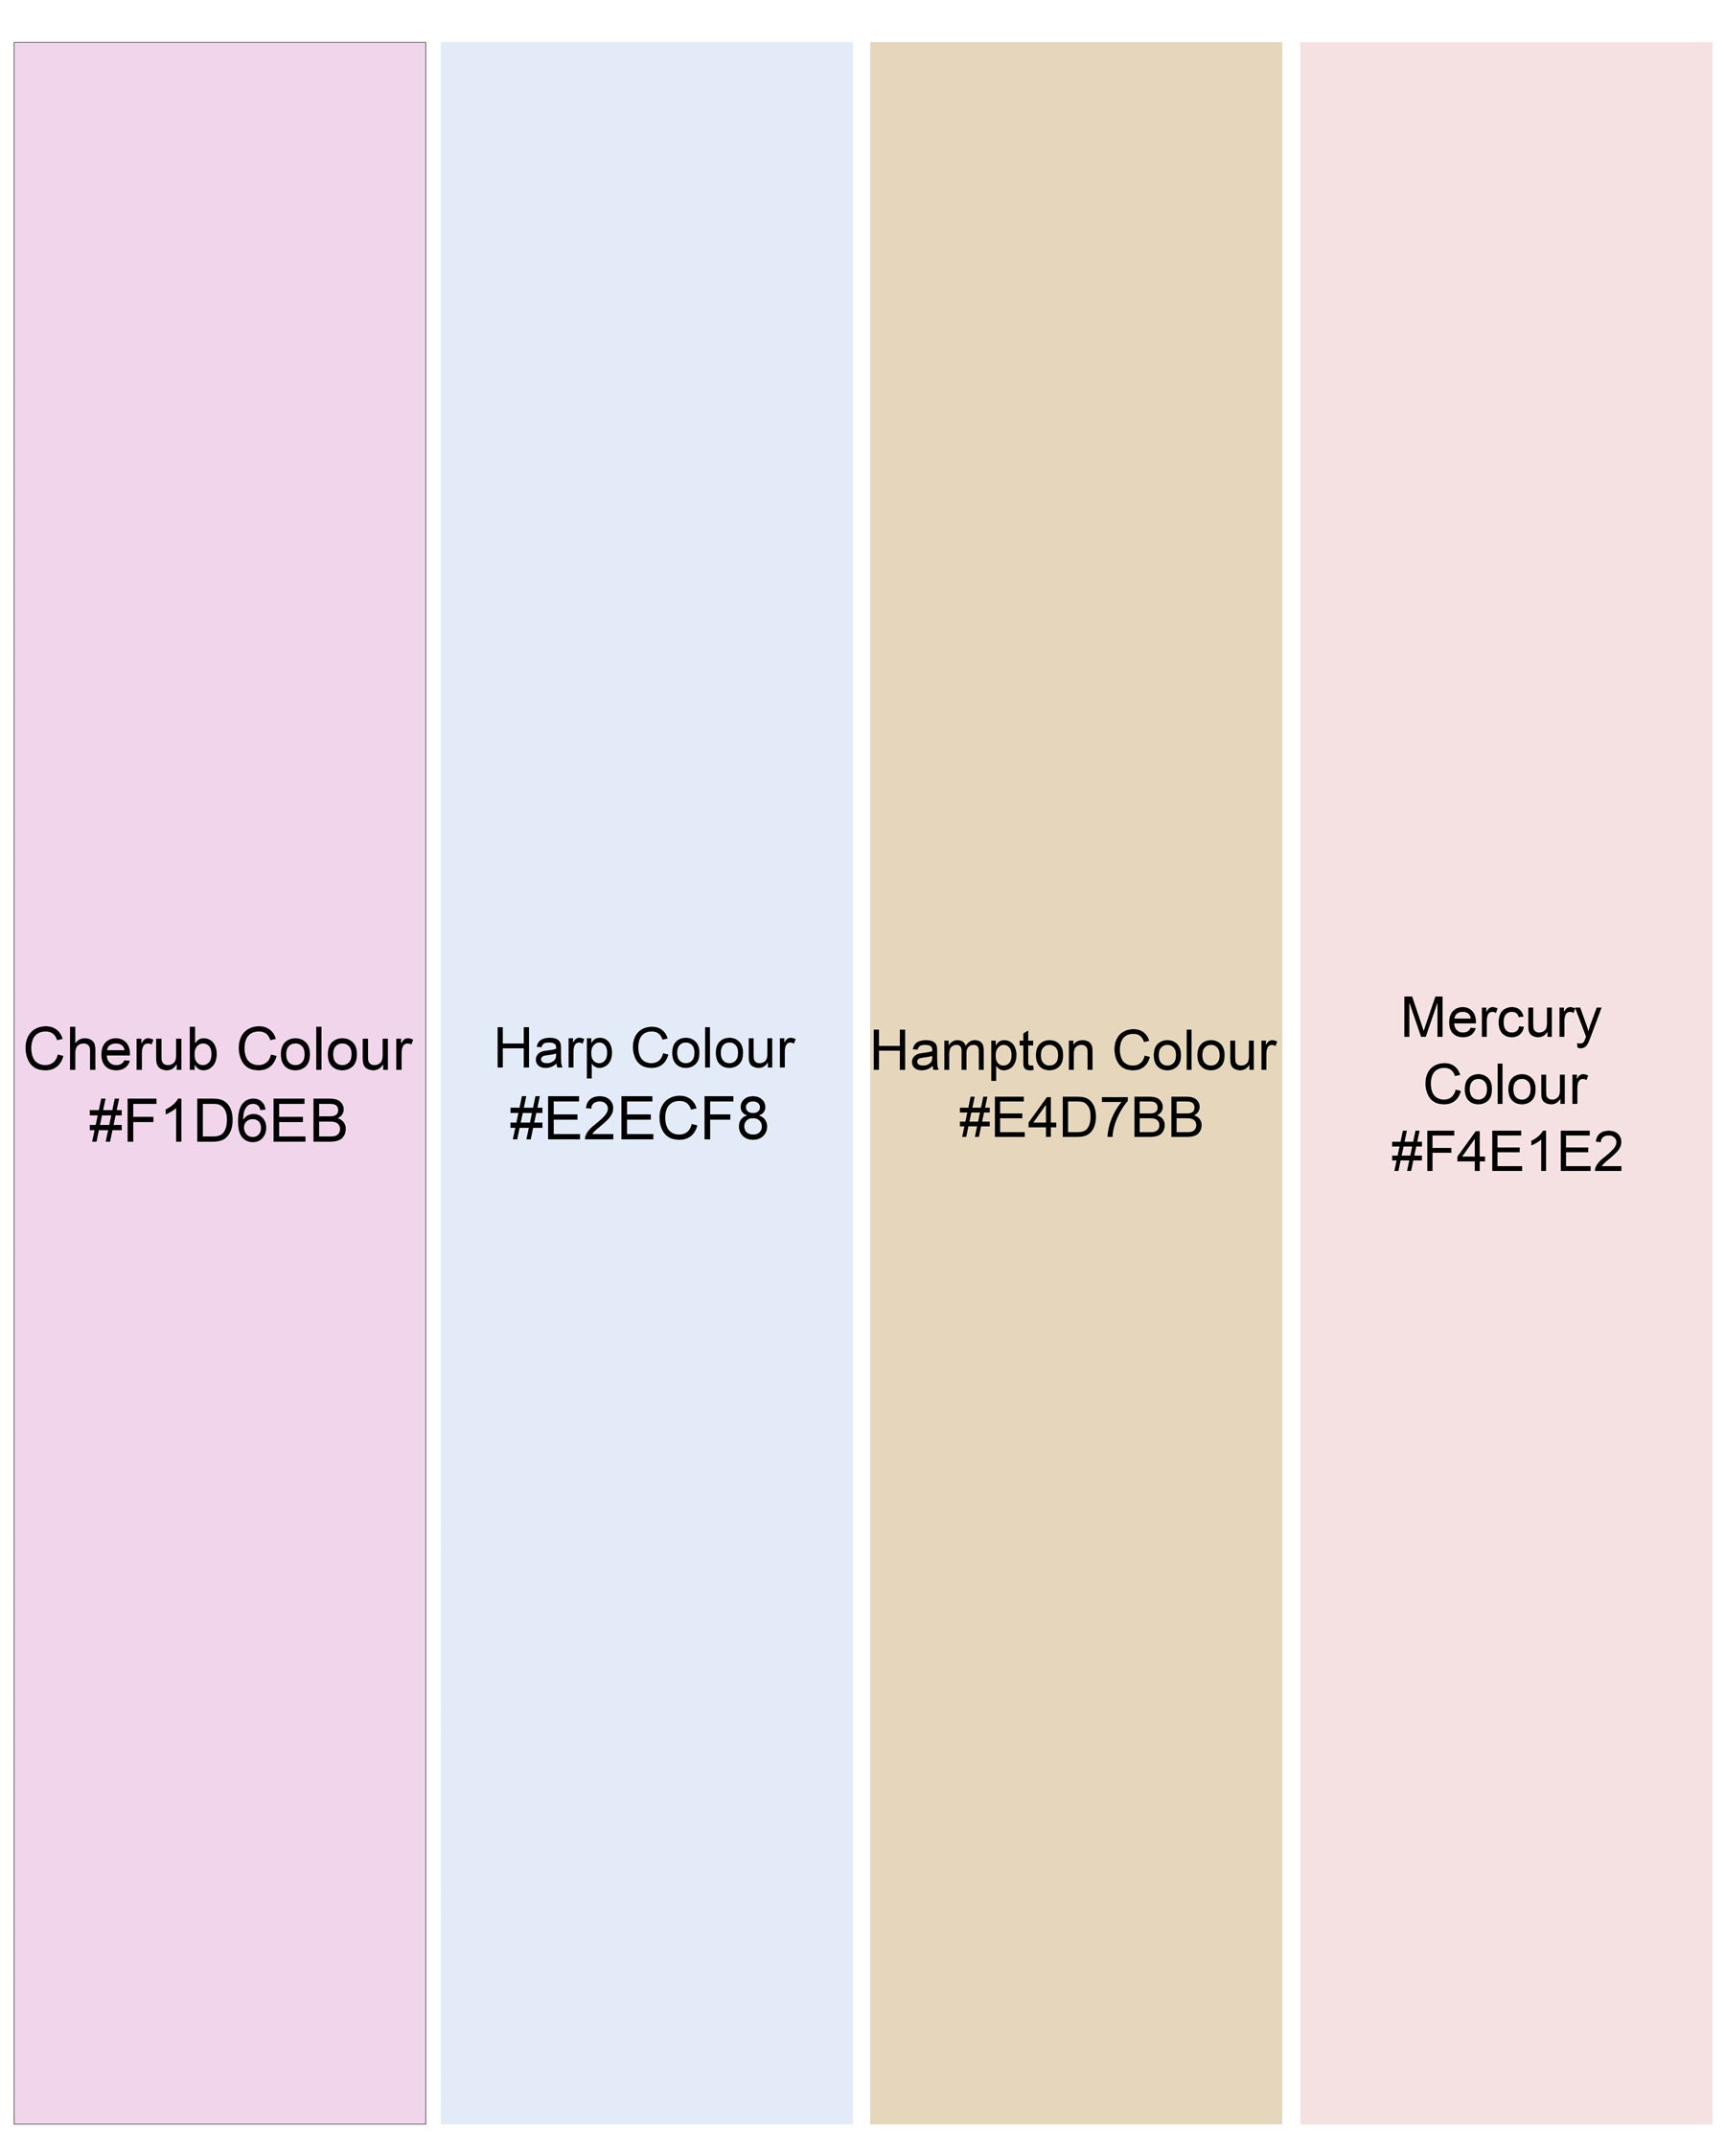 Cherub Pink and Multicolour Printed Super Soft Premium Cotton Women’s Shirt WS059-M-32, WS059-M-34, WS059-M-36, WS059-M-38, WS059-M-40, WS059-M-42